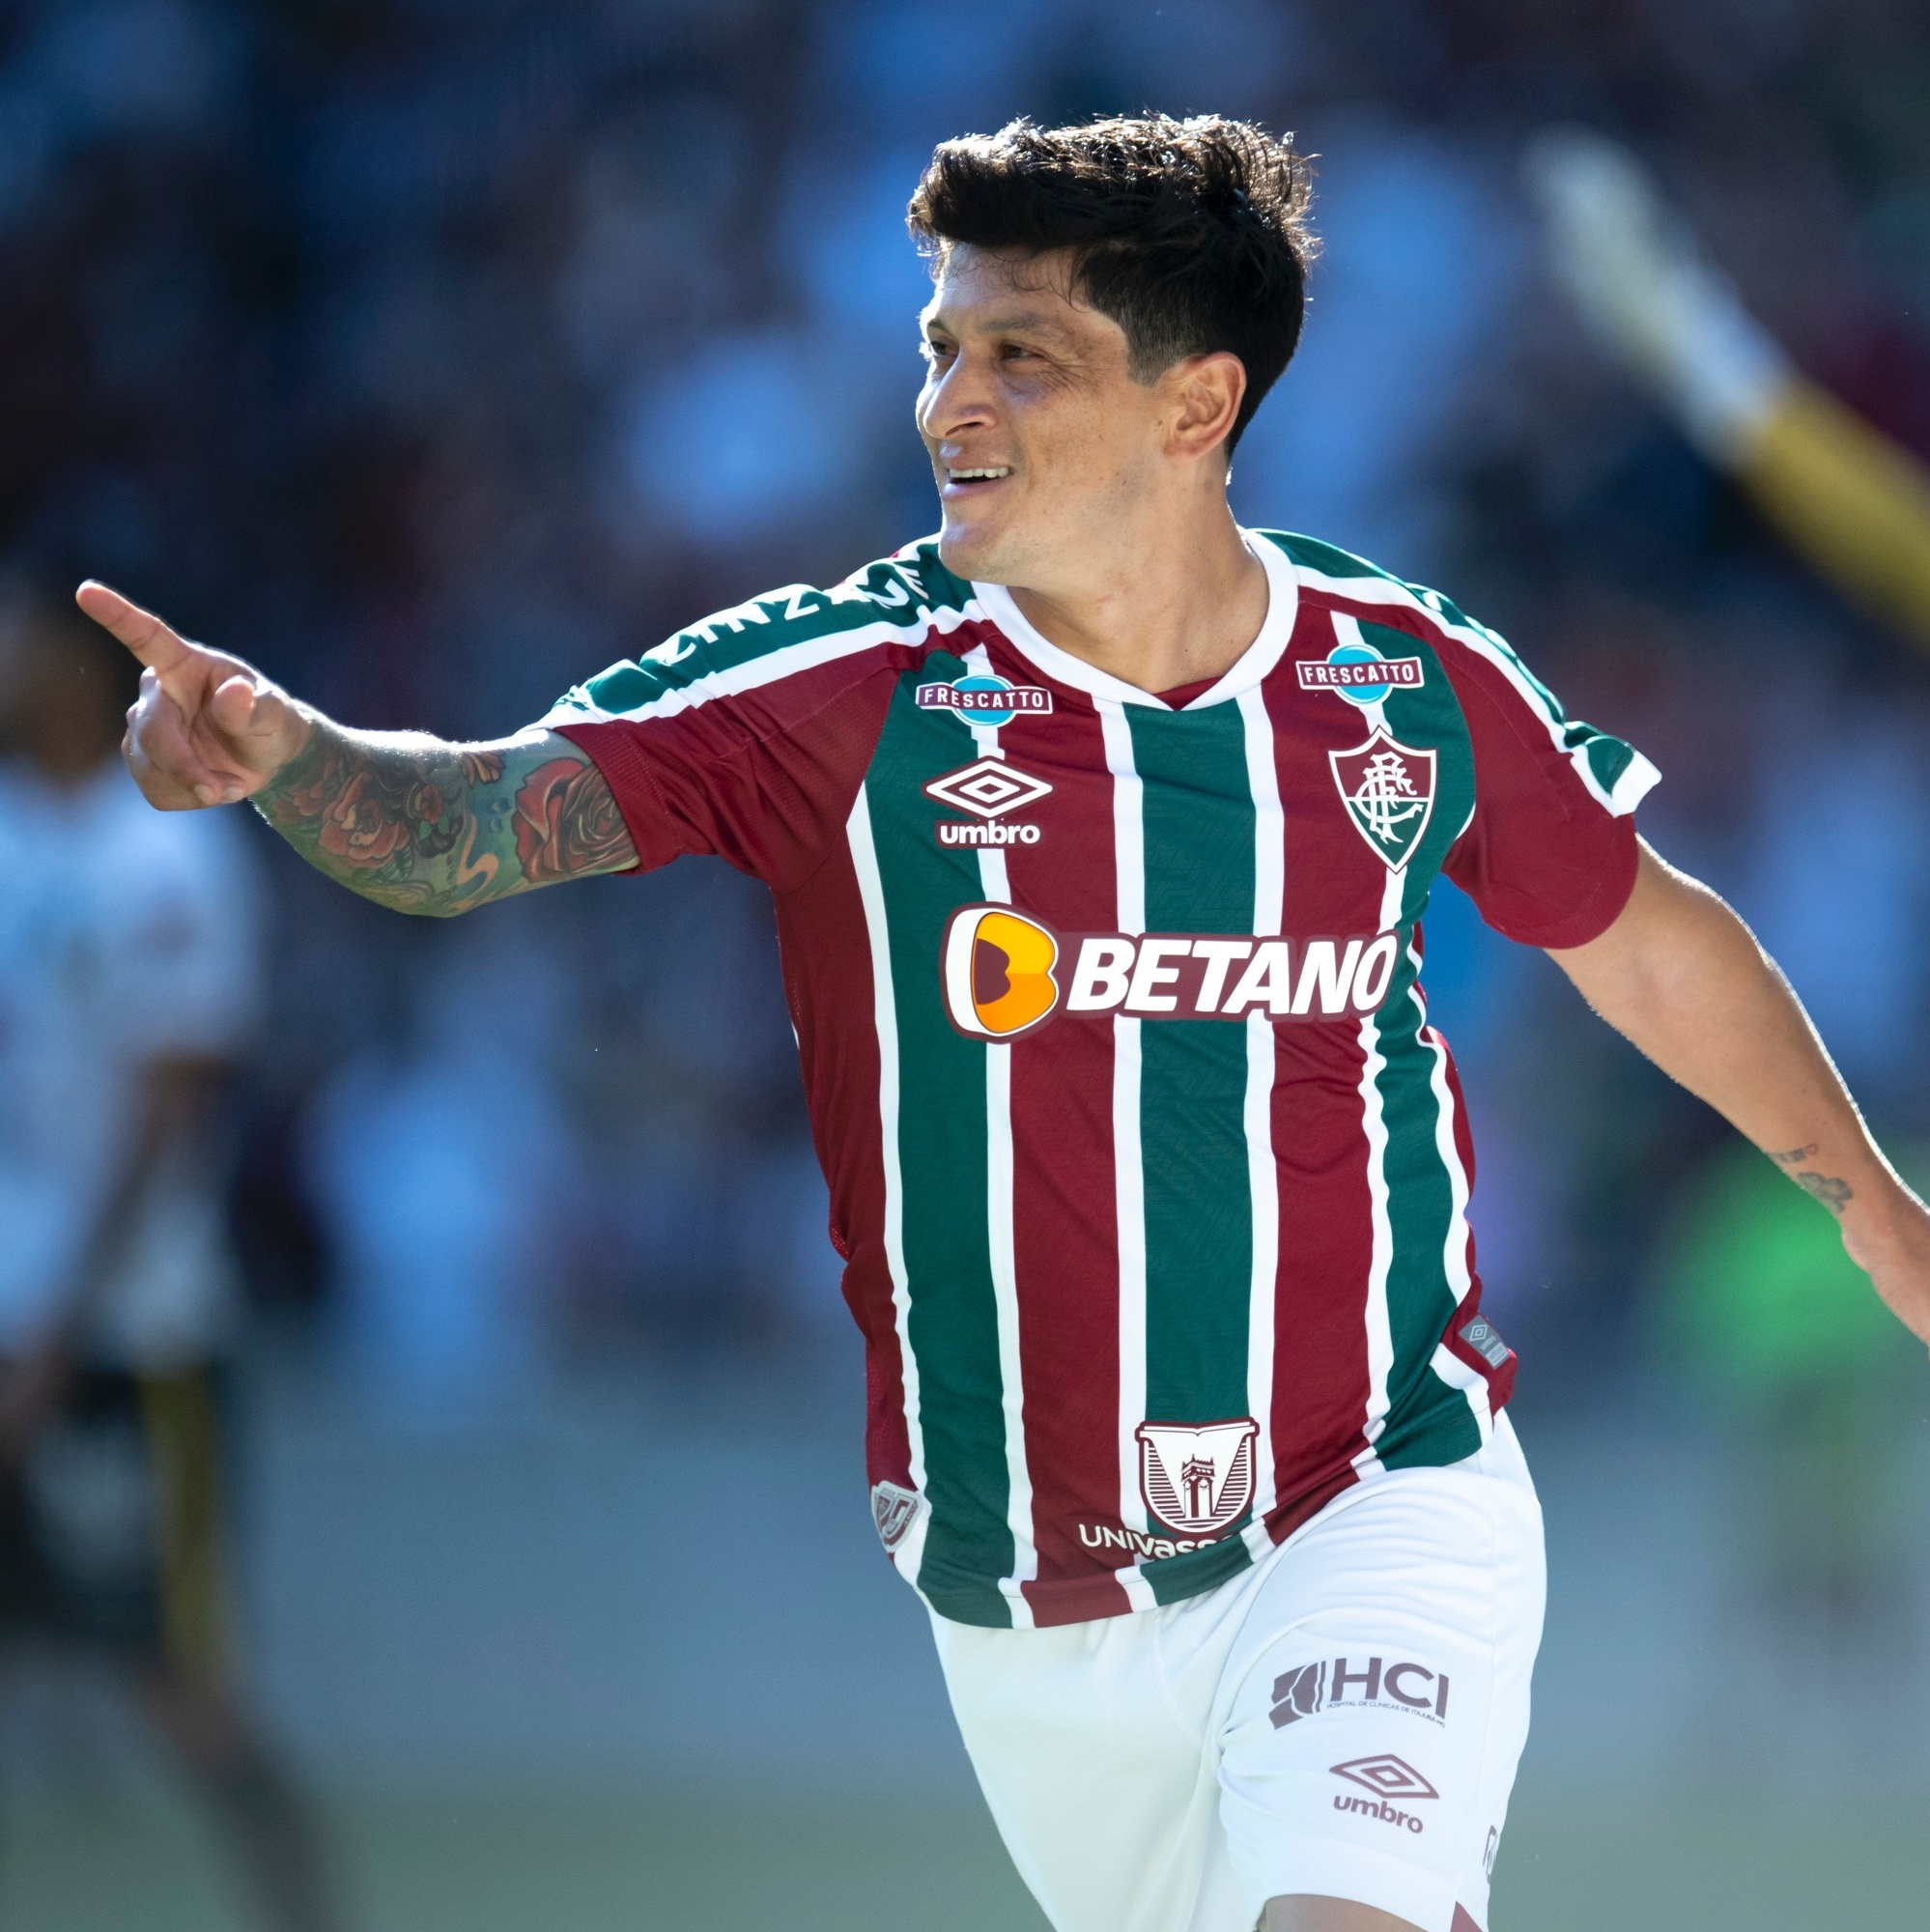 Bola de cristal de jornal calcula favorito no jogo entre Fluminense e  Bahia - Fluminense: Últimas notícias, vídeos, onde assistir e próximos jogos